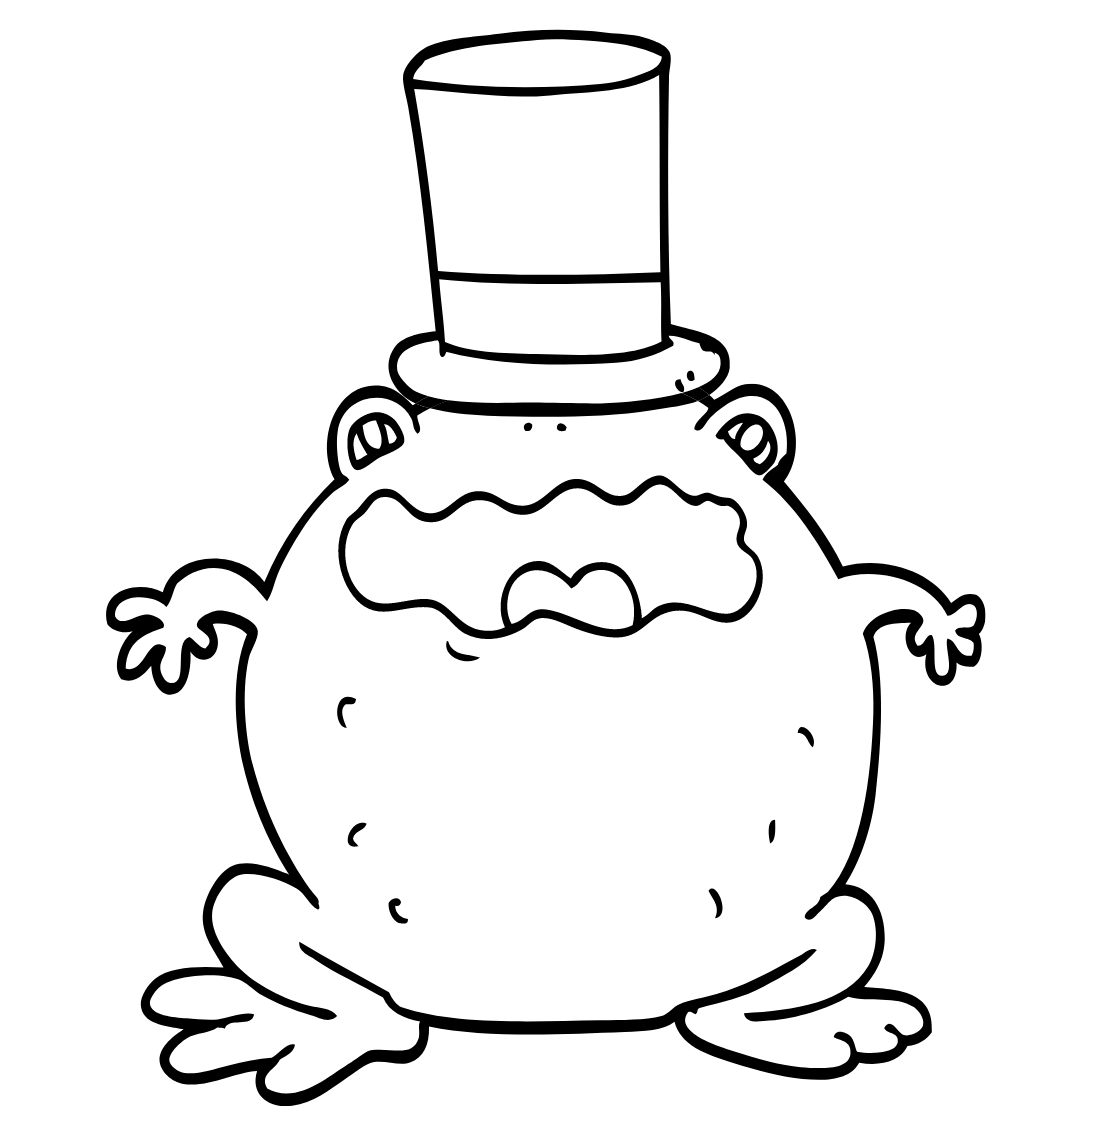 Cartoon Toad Wearing Top Hat